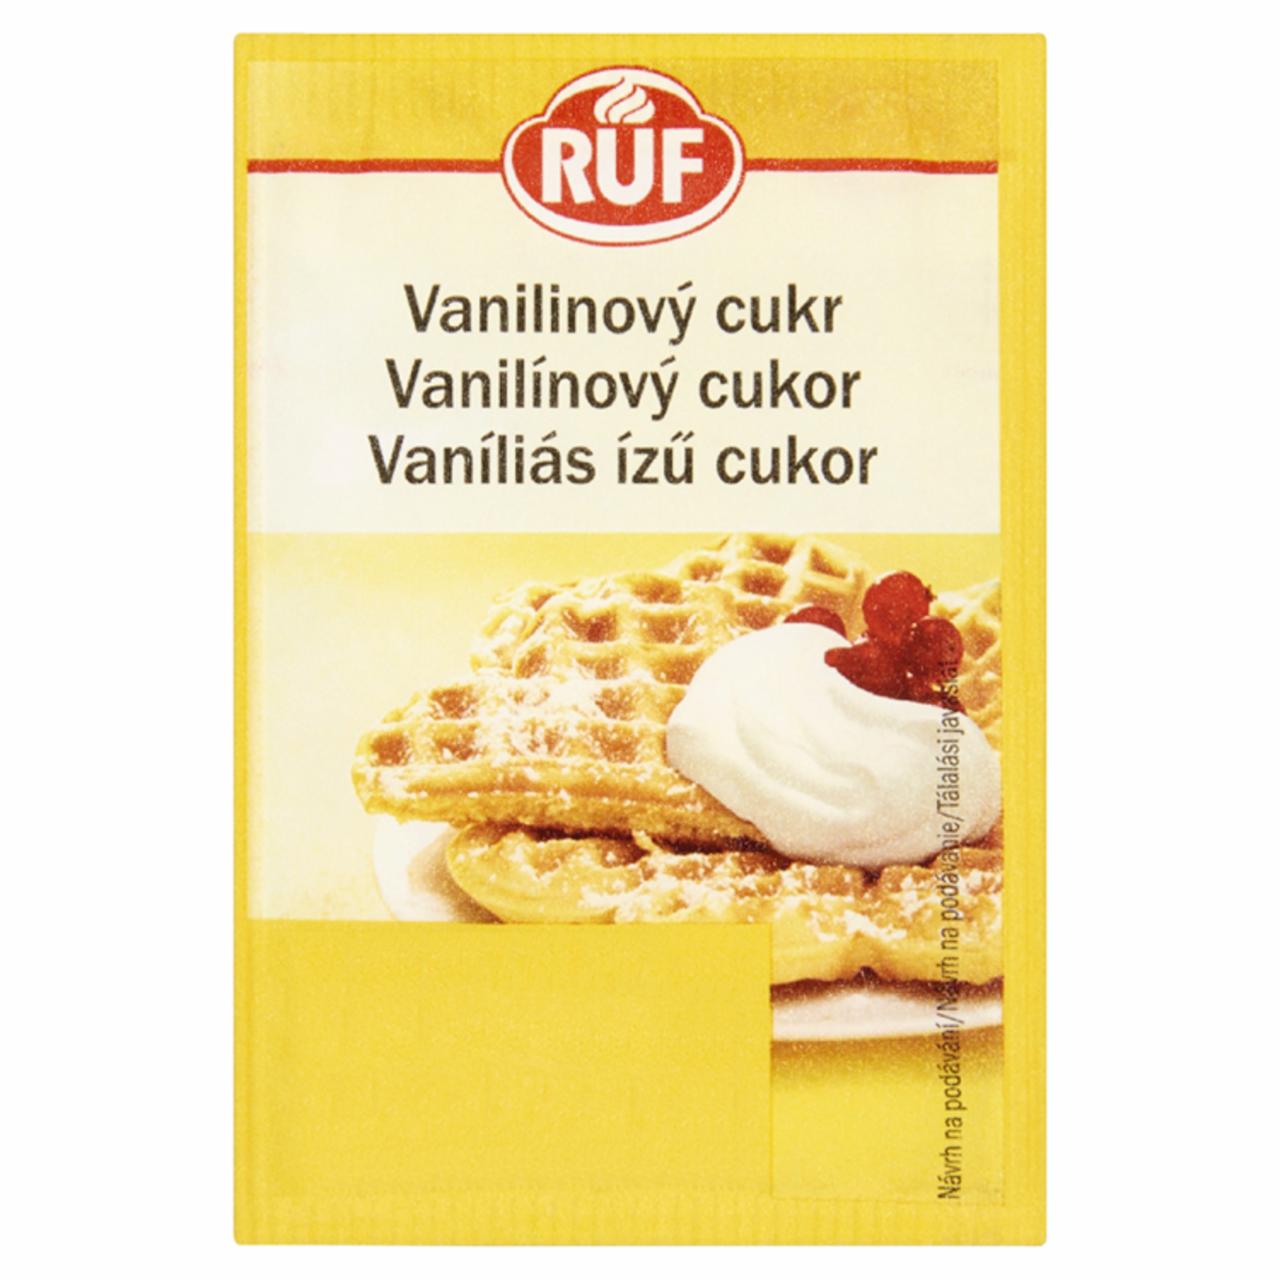 Képek - RUF vaníliás cukor 10 x 8 g